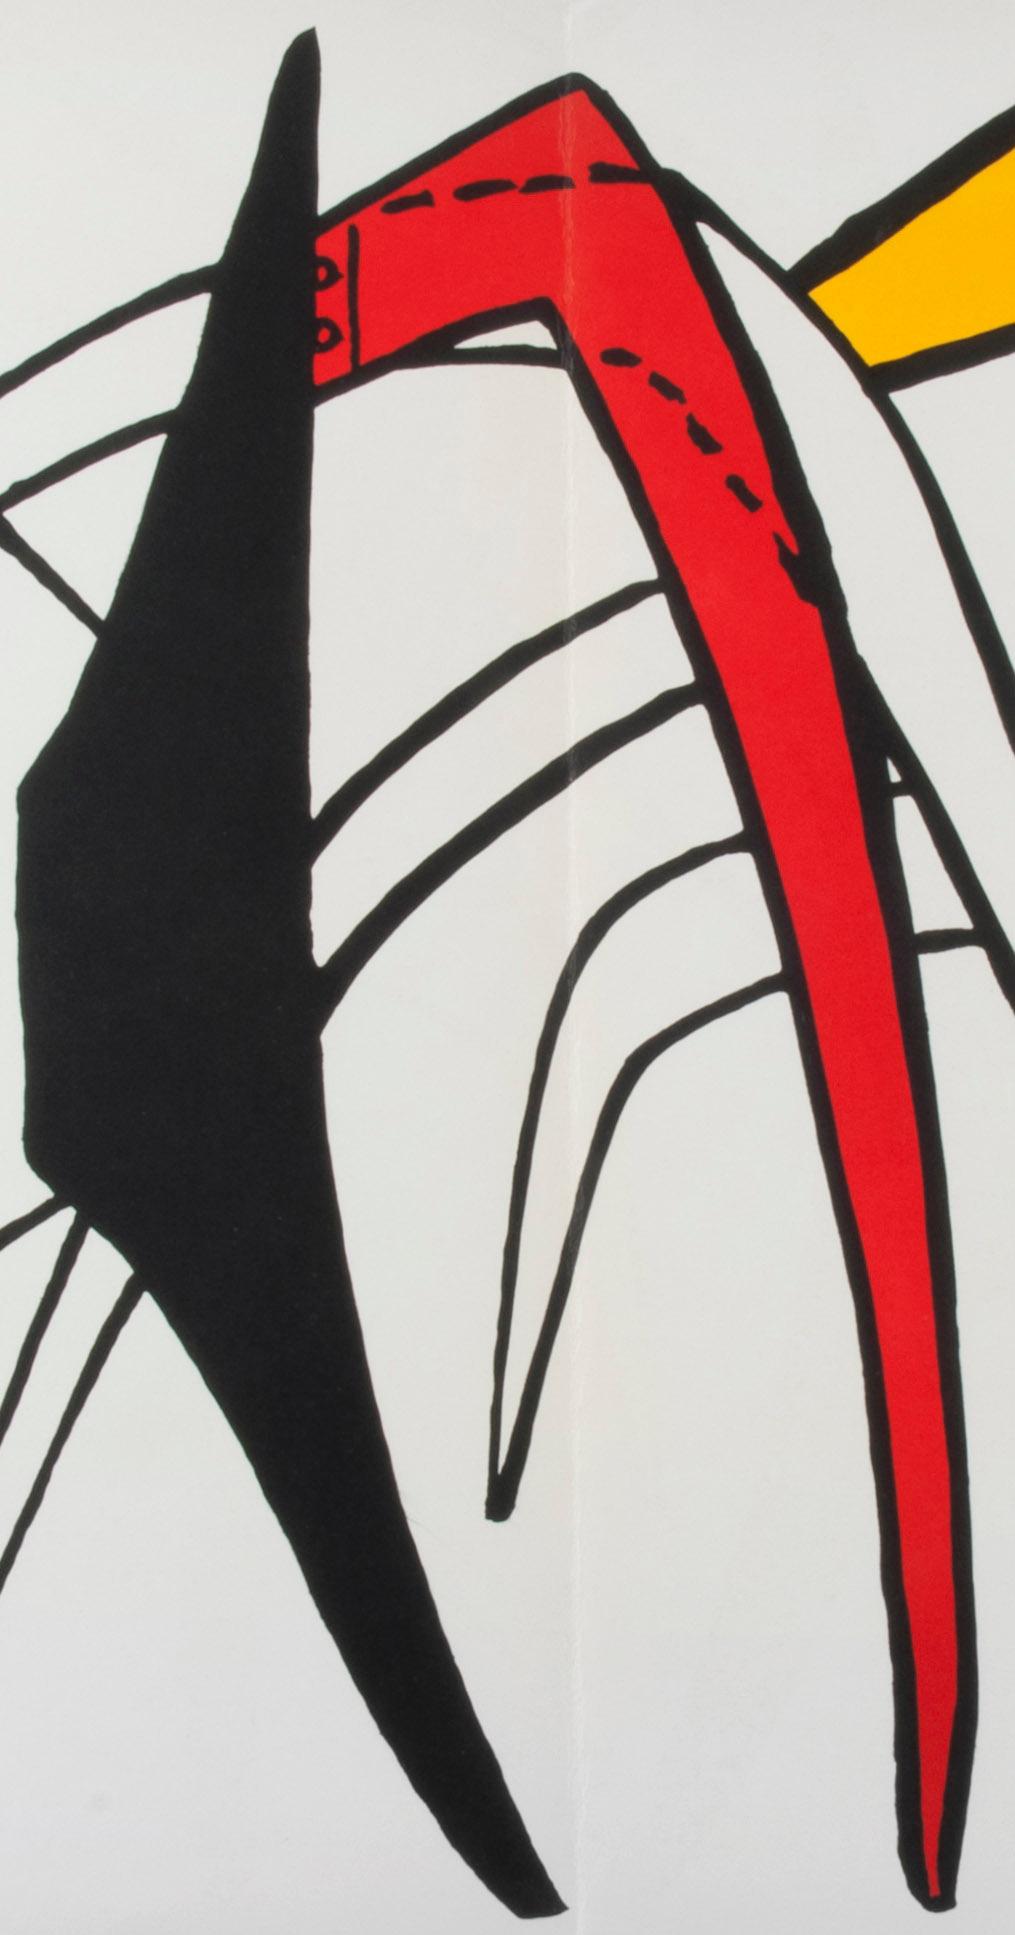 Untitled (Plate 2) DLM - American Modern Print by Alexander Calder